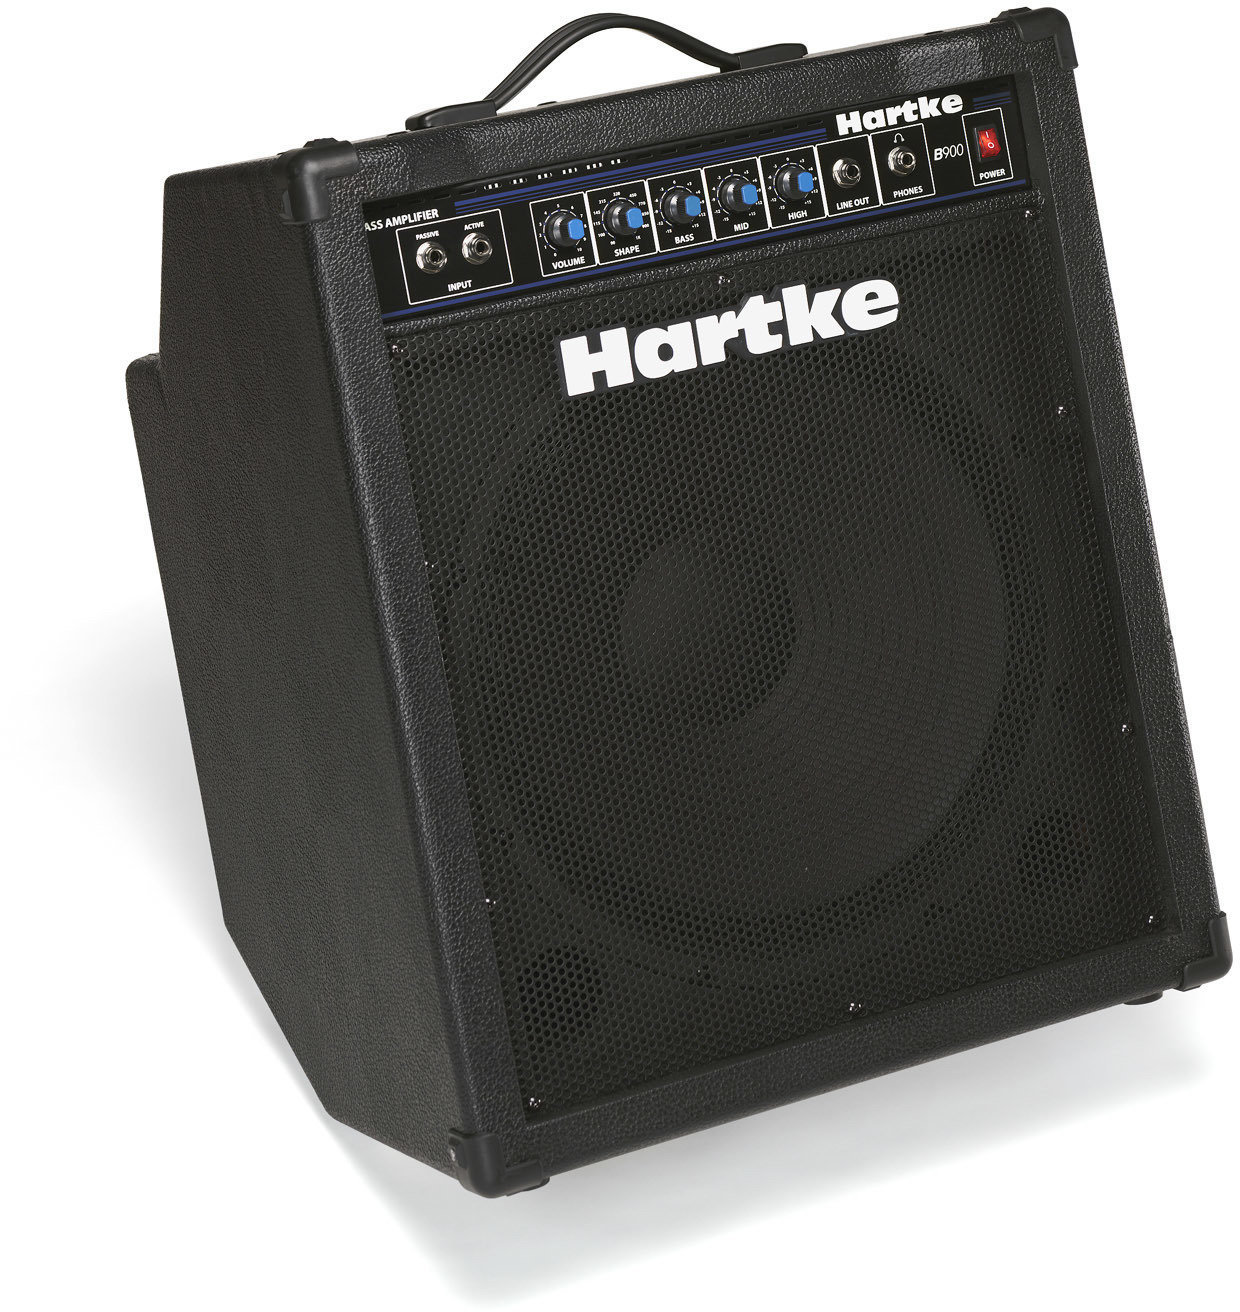 Hartke B900 Hartke